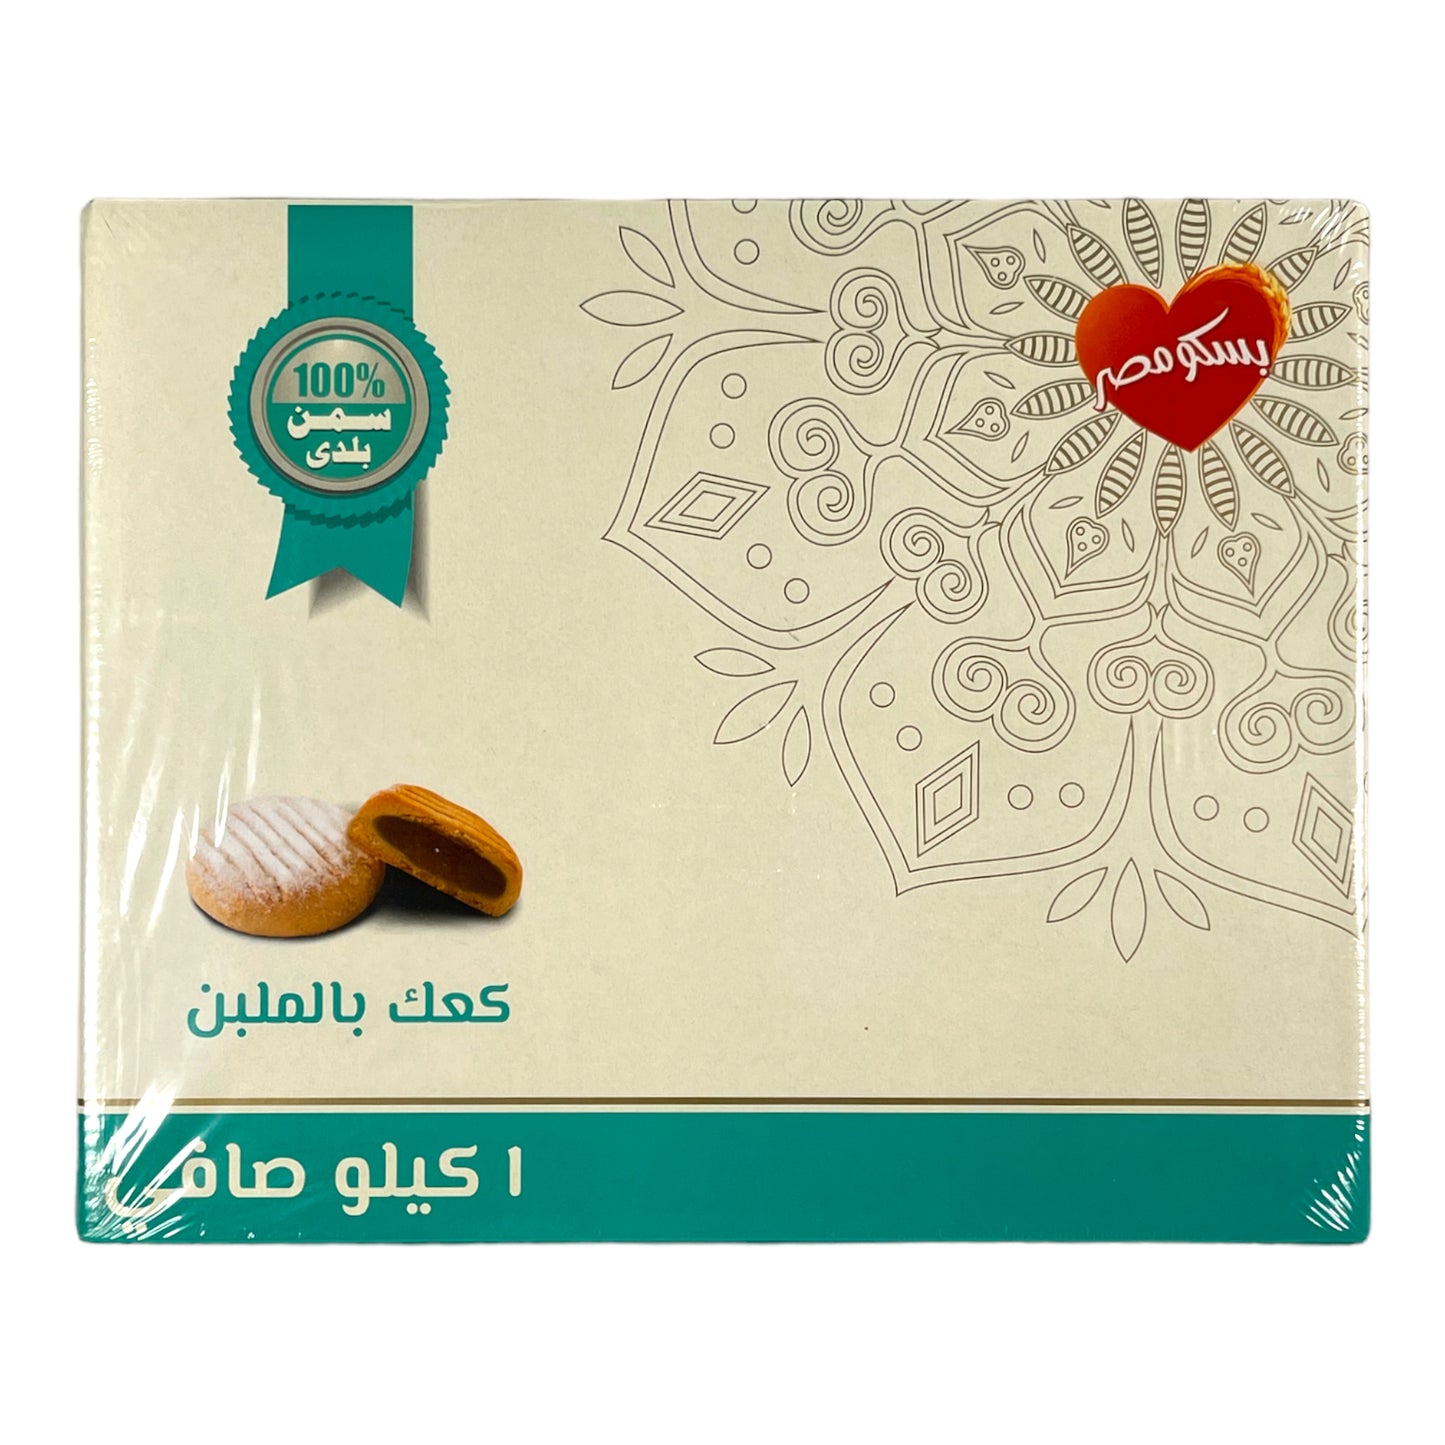 Bisco Misr Kahk (Cookies) with Malban 1 KG بسكو مصر كعك(كحك) بالملبن